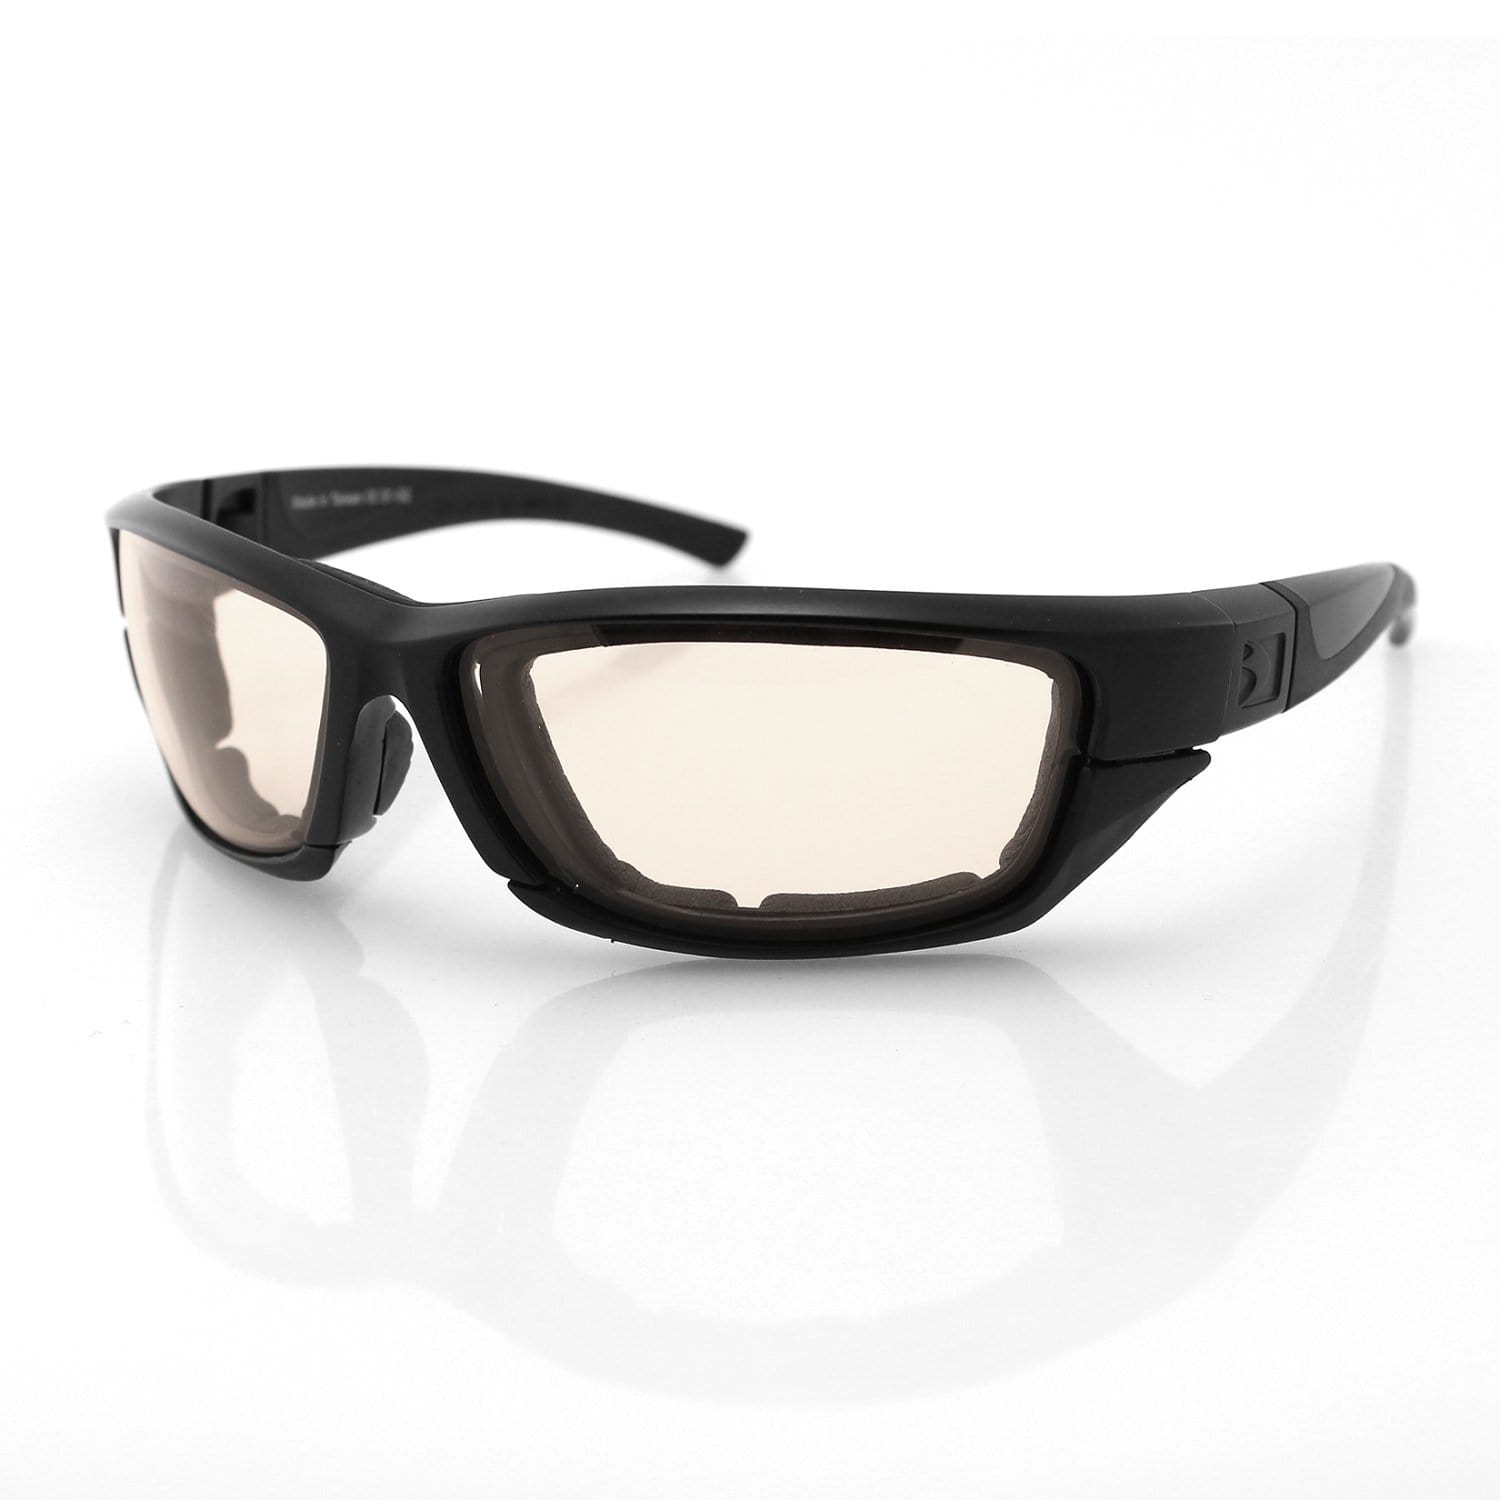 Bobster Apparel : Eyewear - Sunglasses Bobster Decoder 2 Photochromic Eyewear - Matte Black Frames